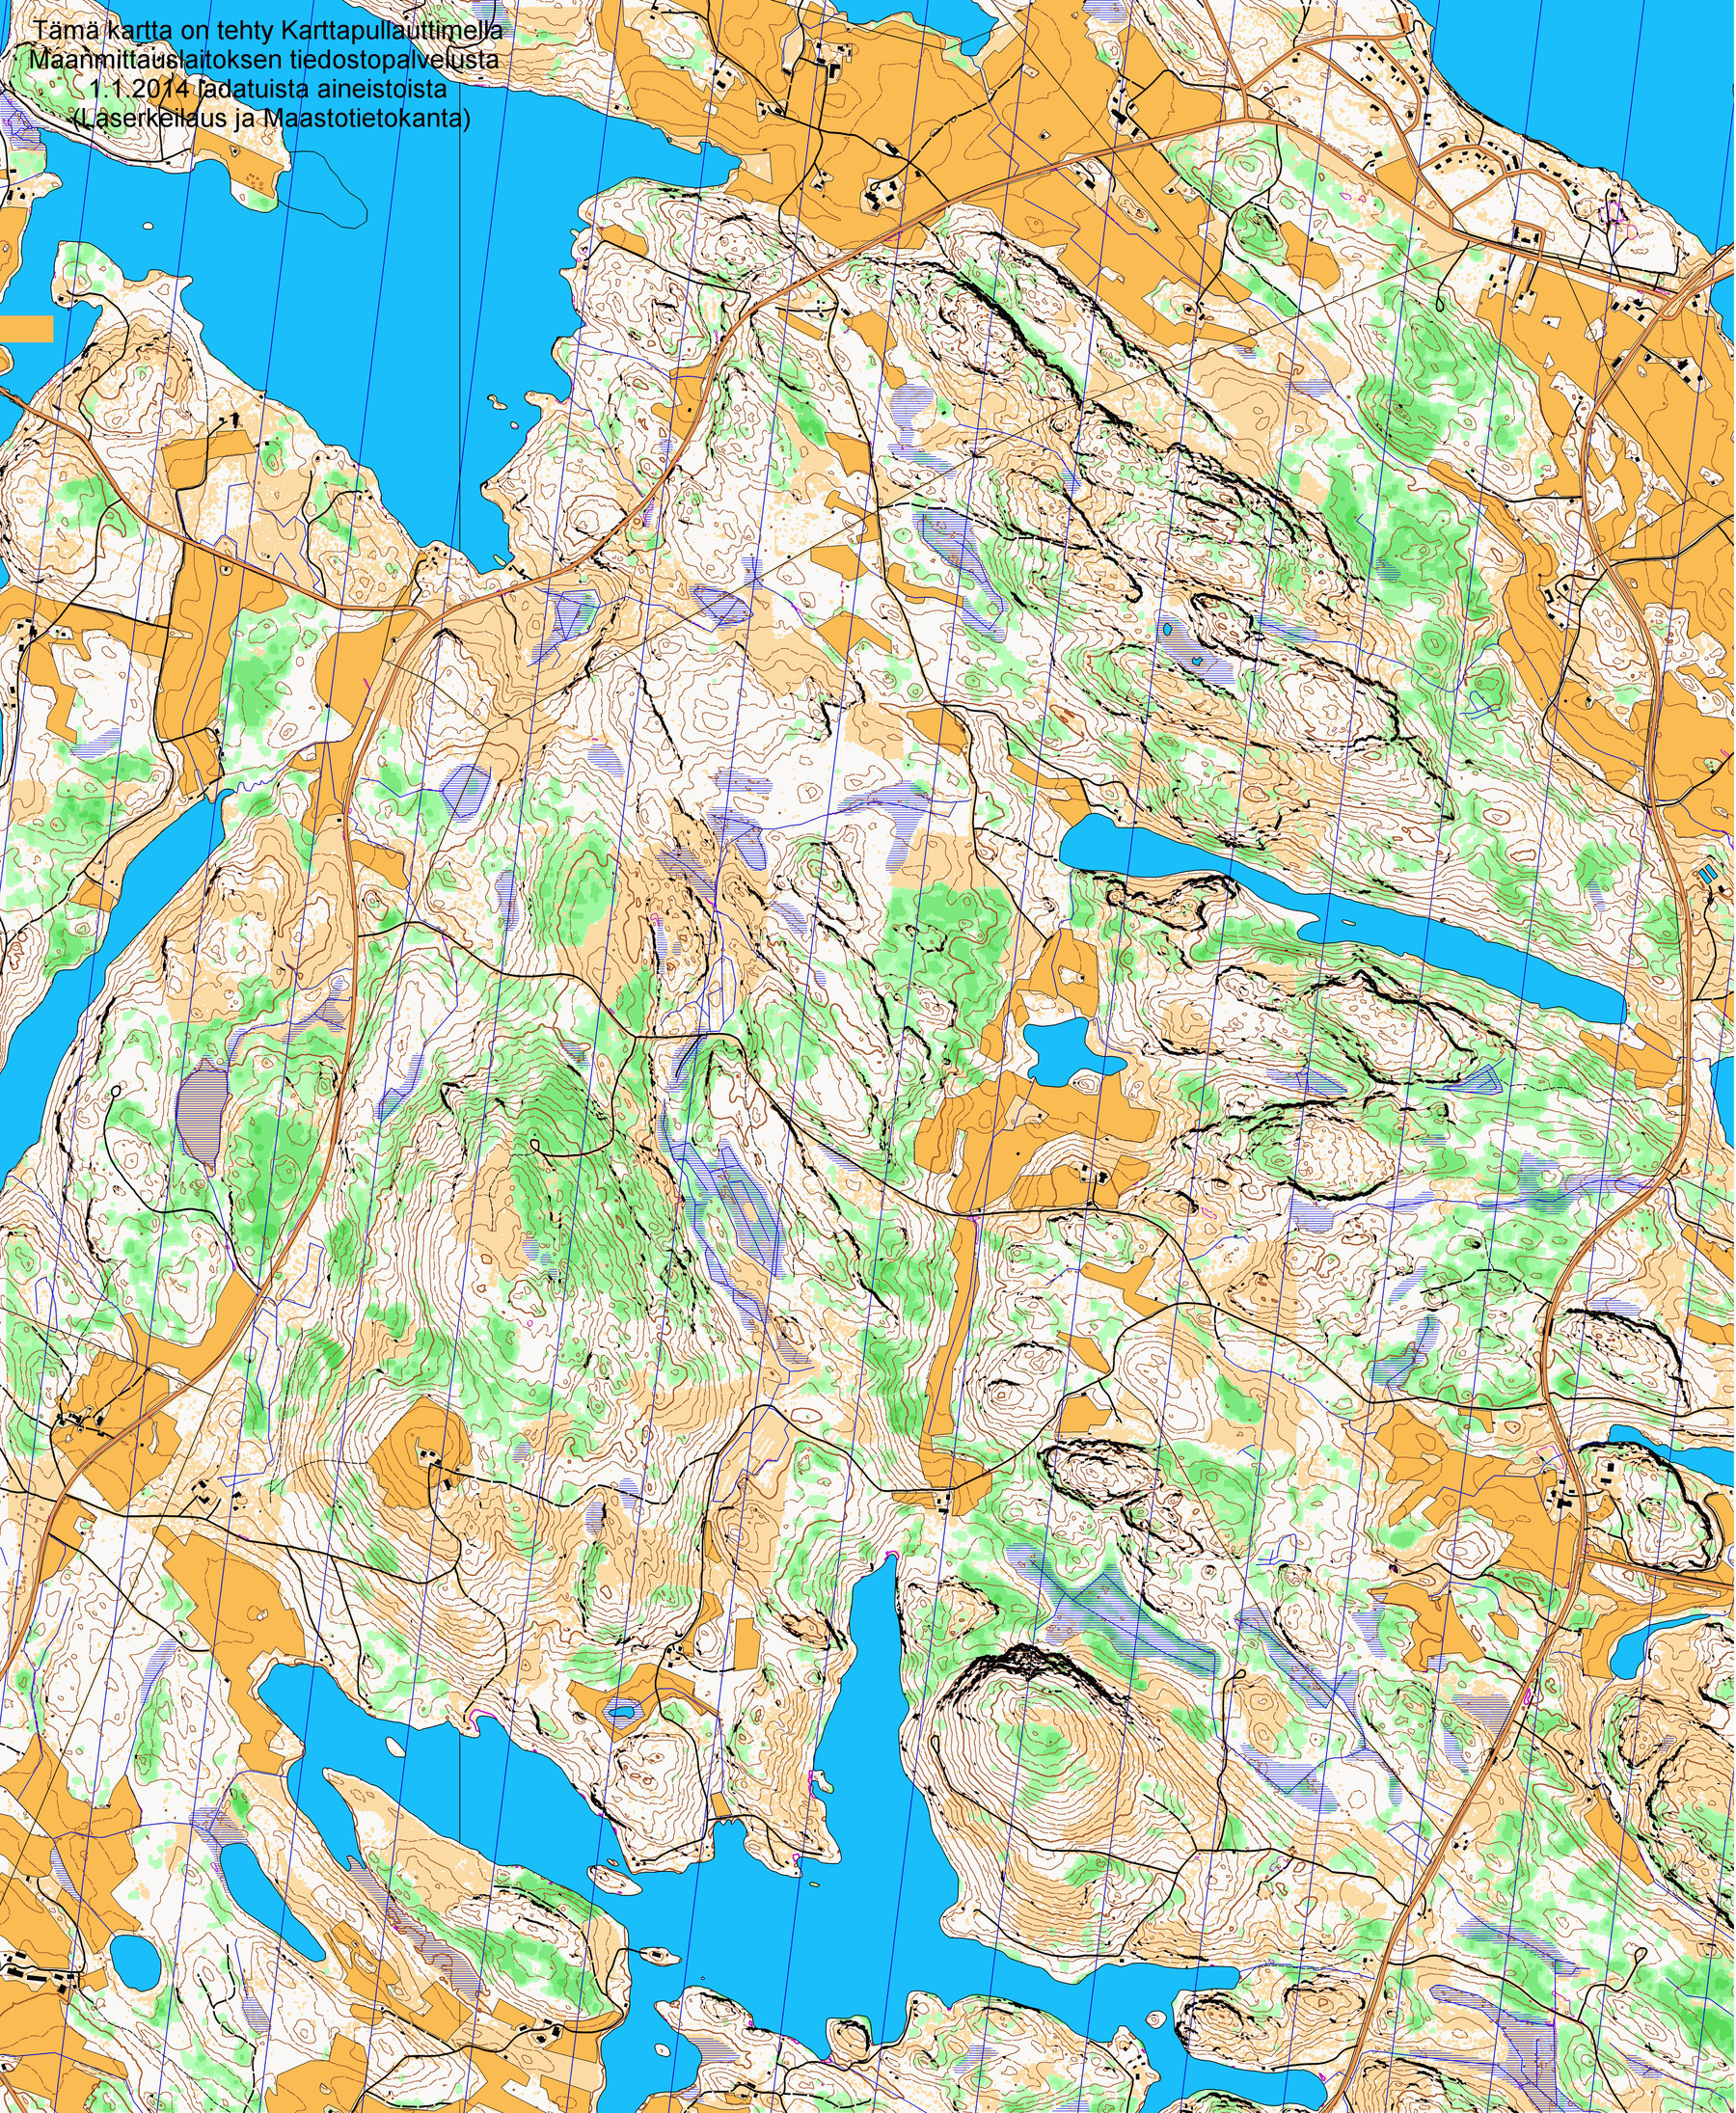 Jukola 2014 maps: Click to compare maps (03/01/2014)